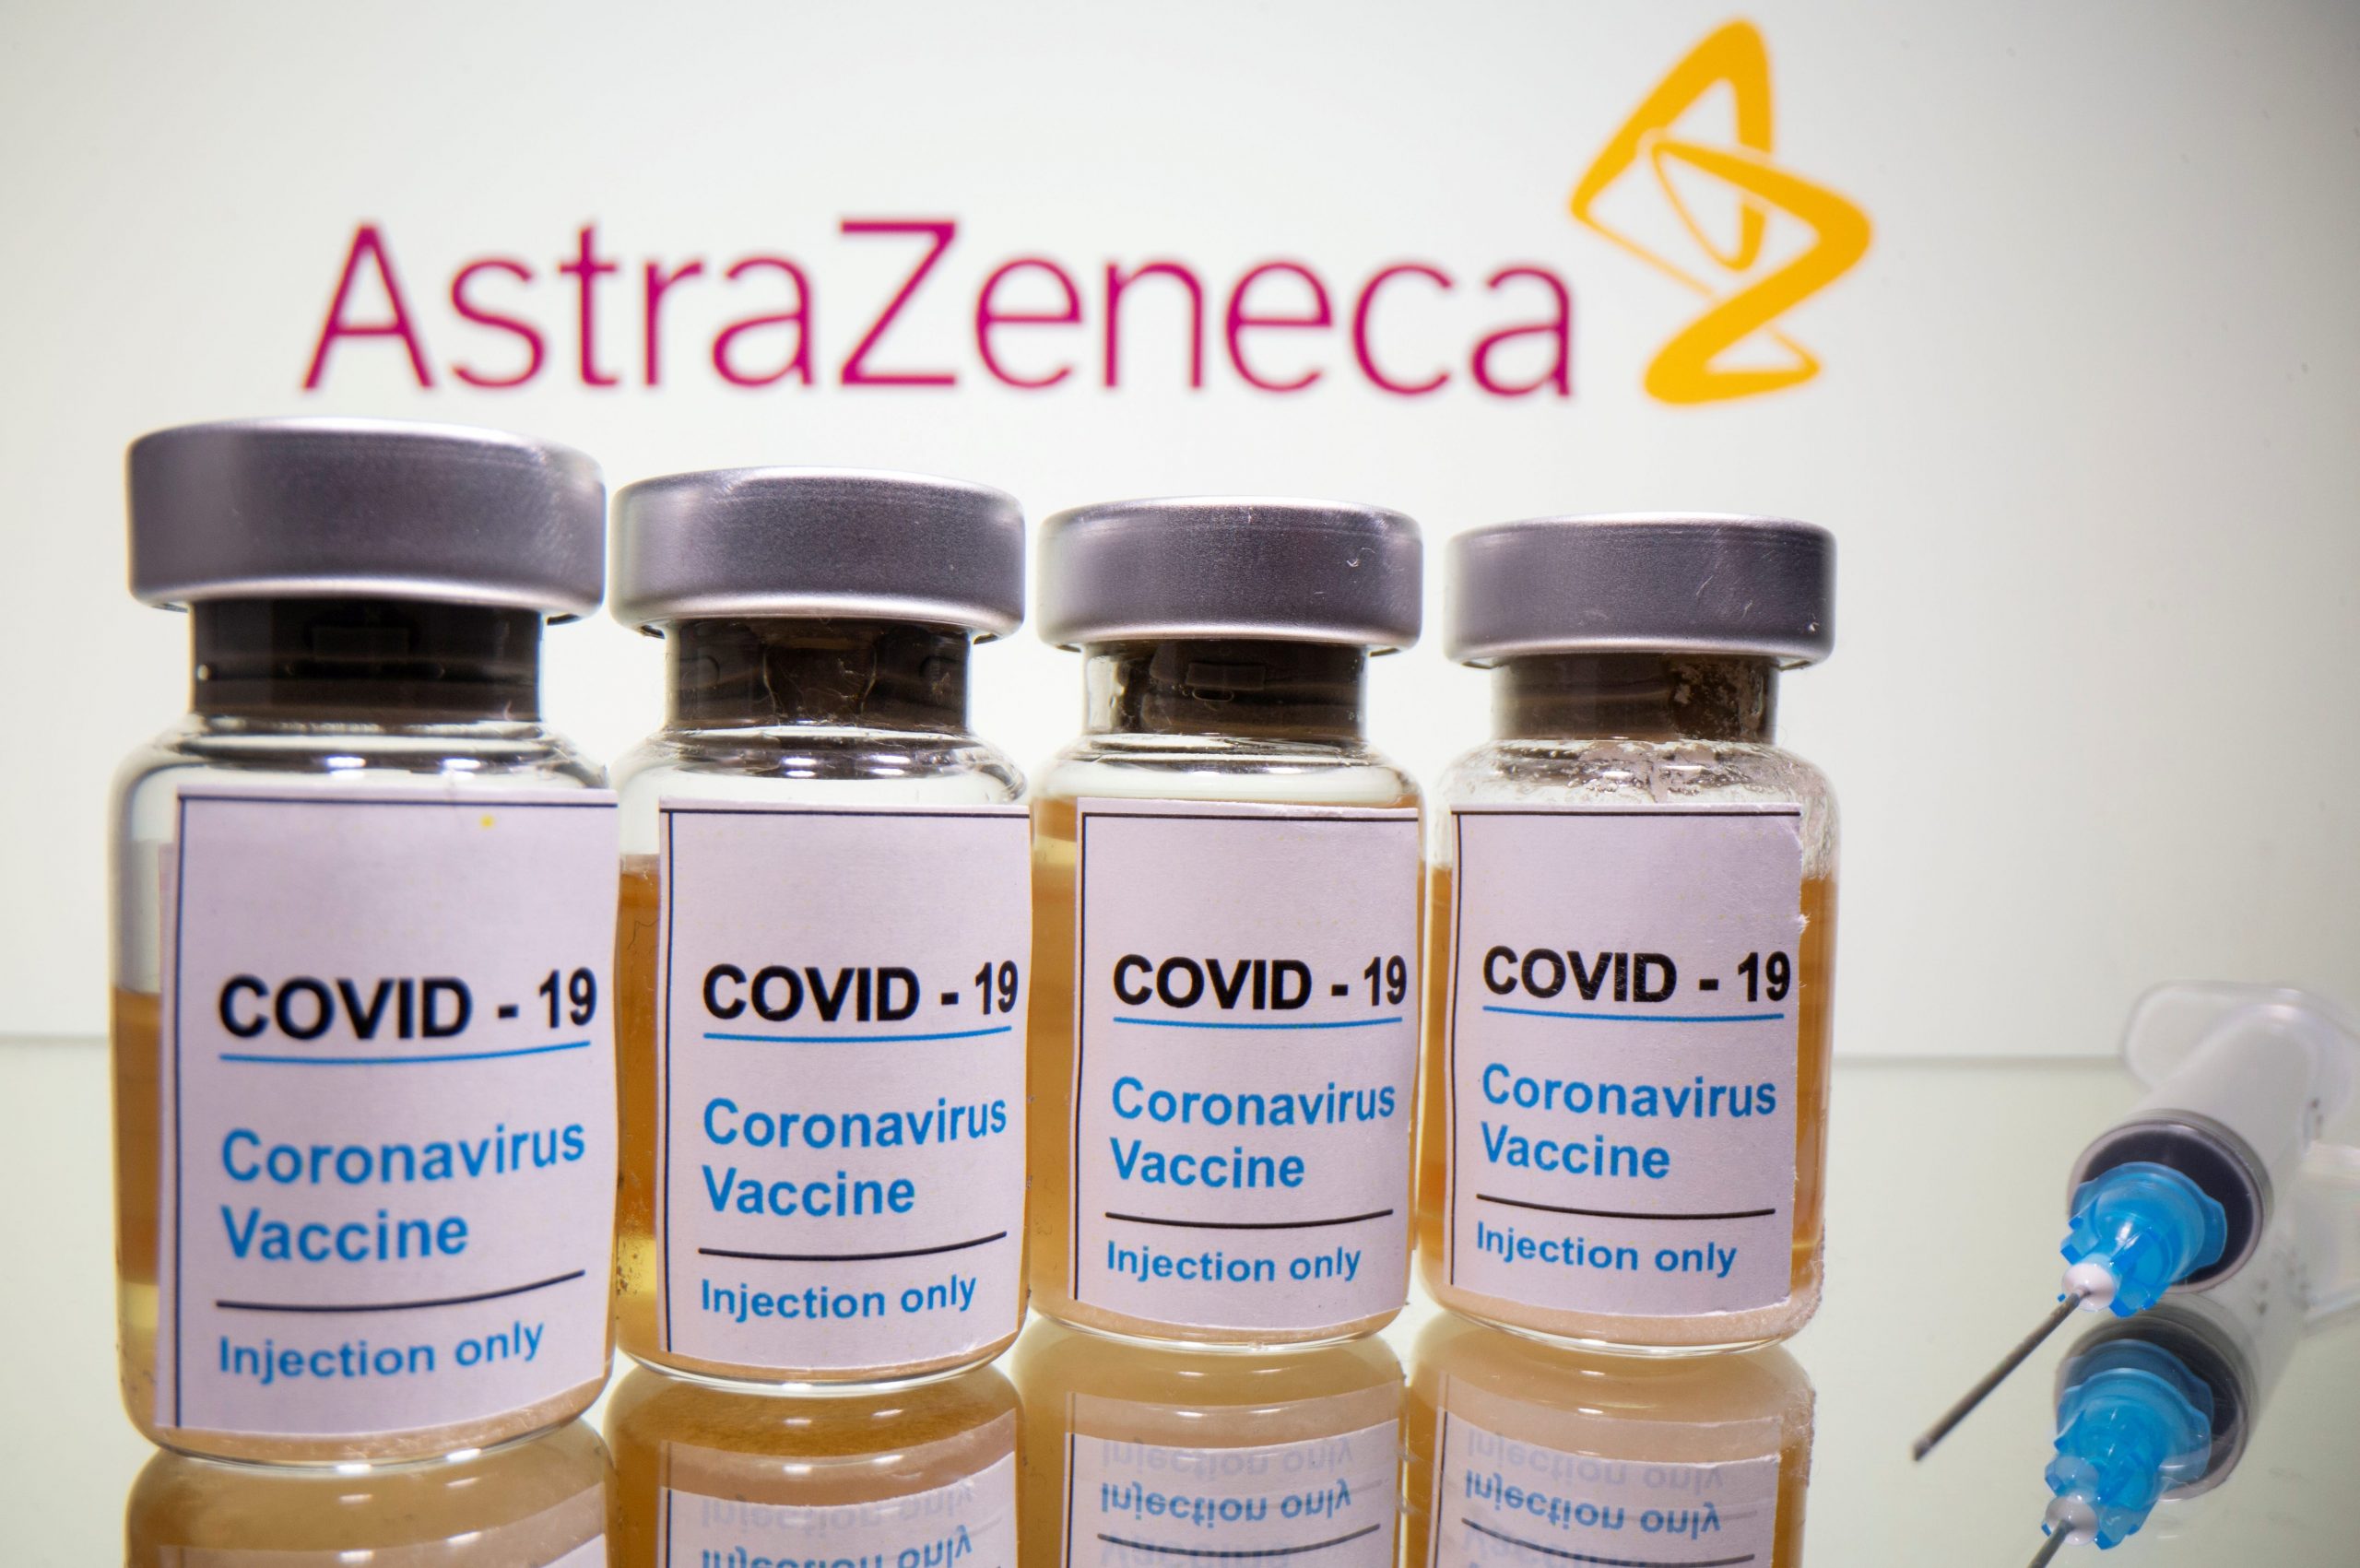 AstraZeneca Vaccine Bottles COVID 19 coronavirus.JPG